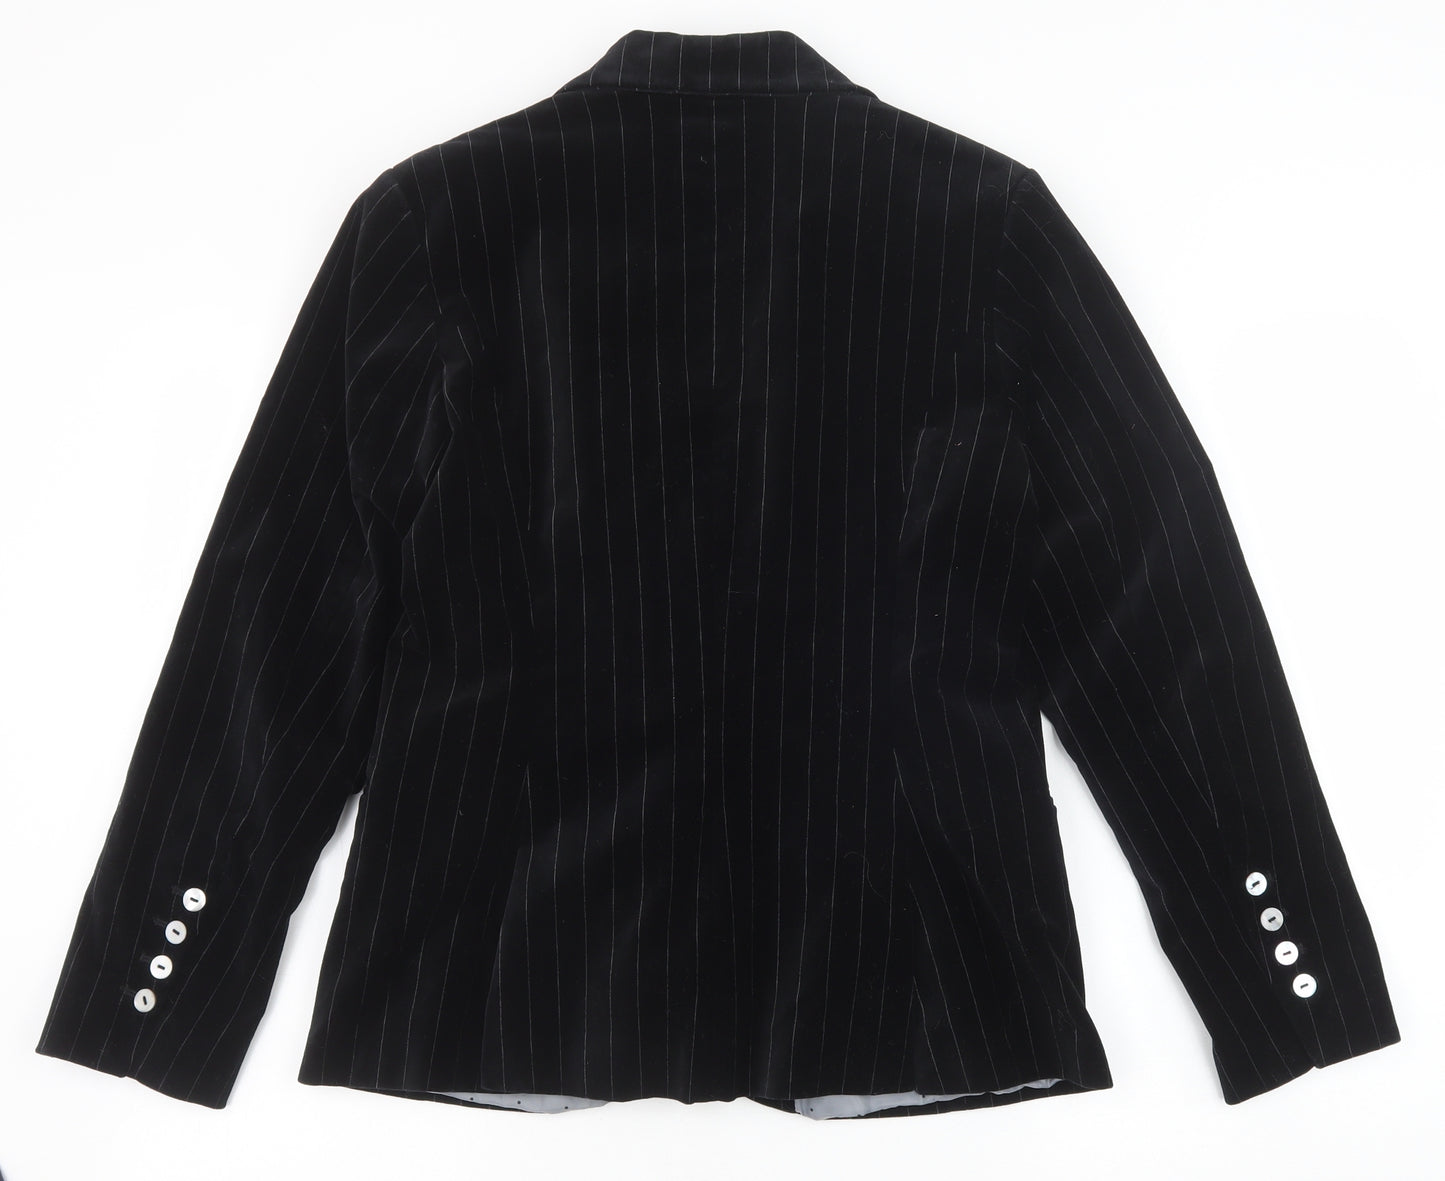 H&M Womens Black Pinstripe Polyester Jacket Suit Jacket Size 14 Button